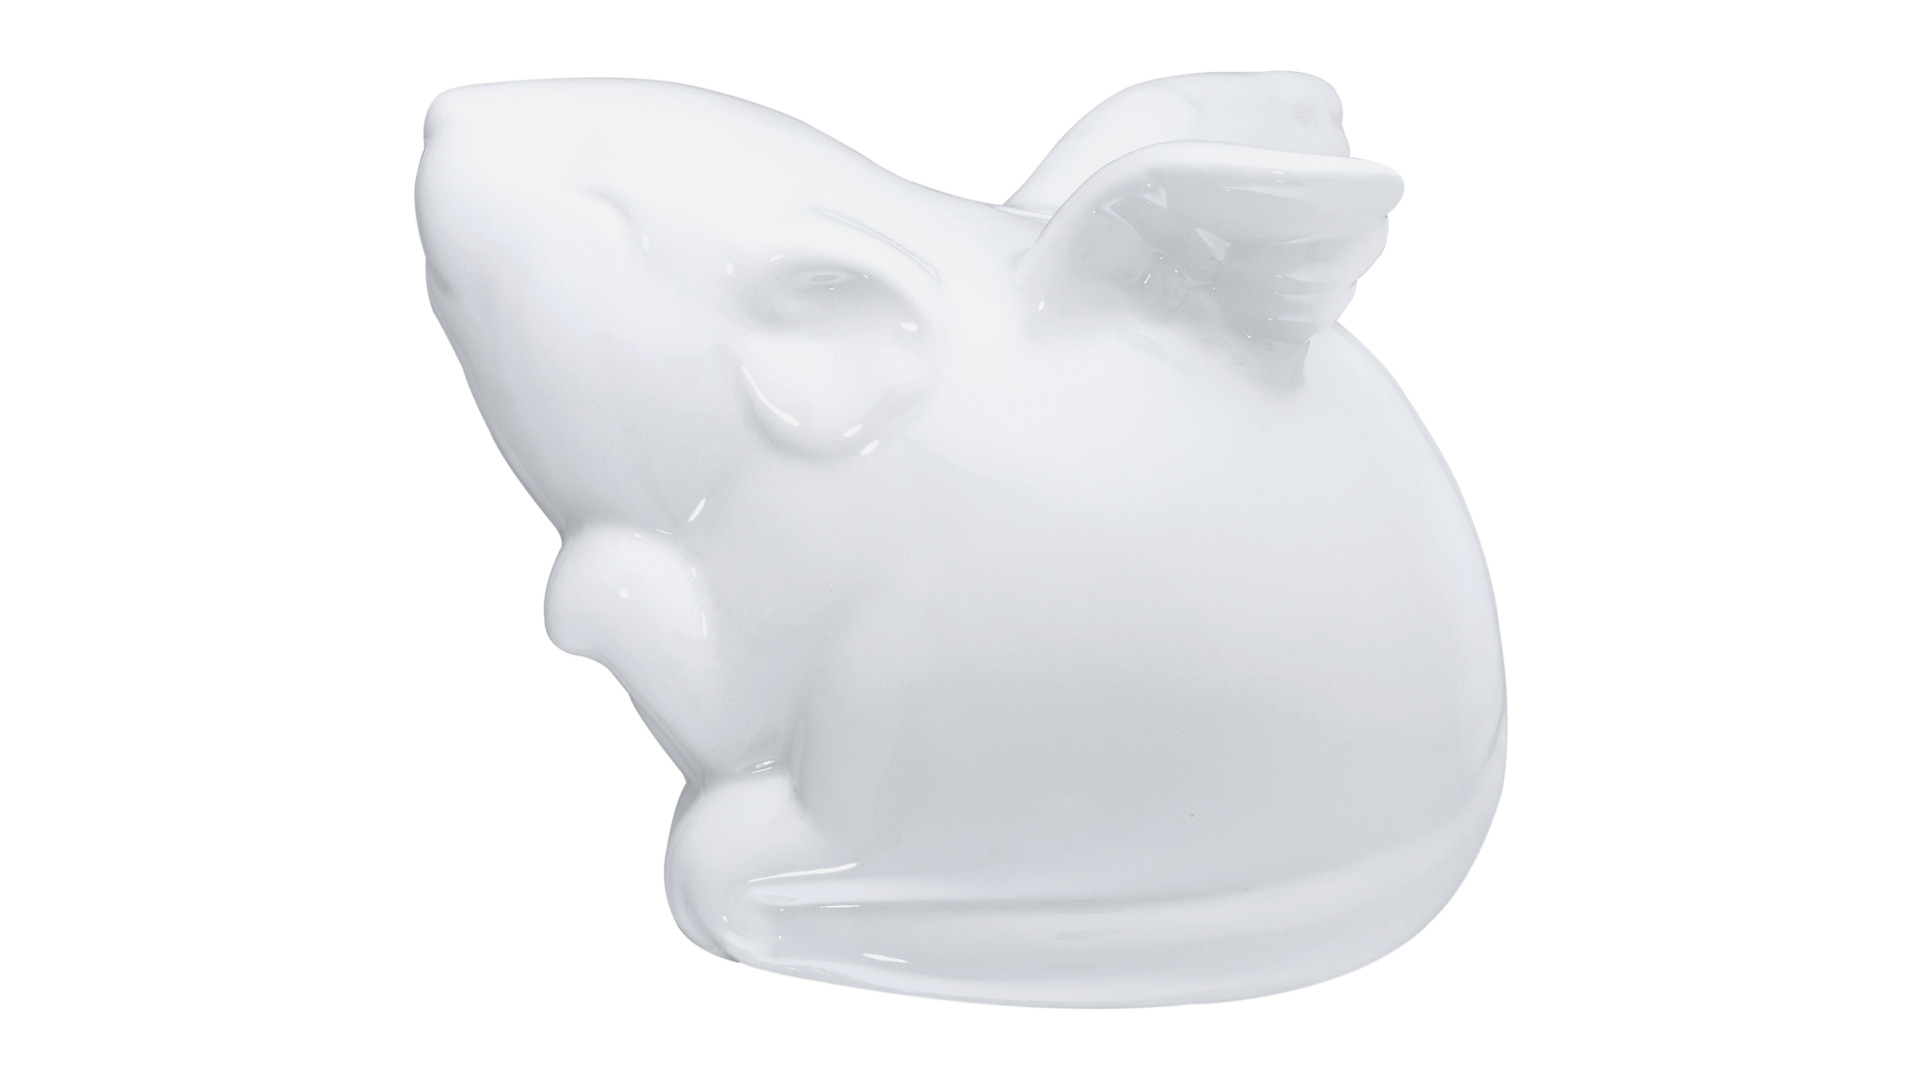 Копилка My Ceramic Story Белая мышка с крыльями 17 см, керамика